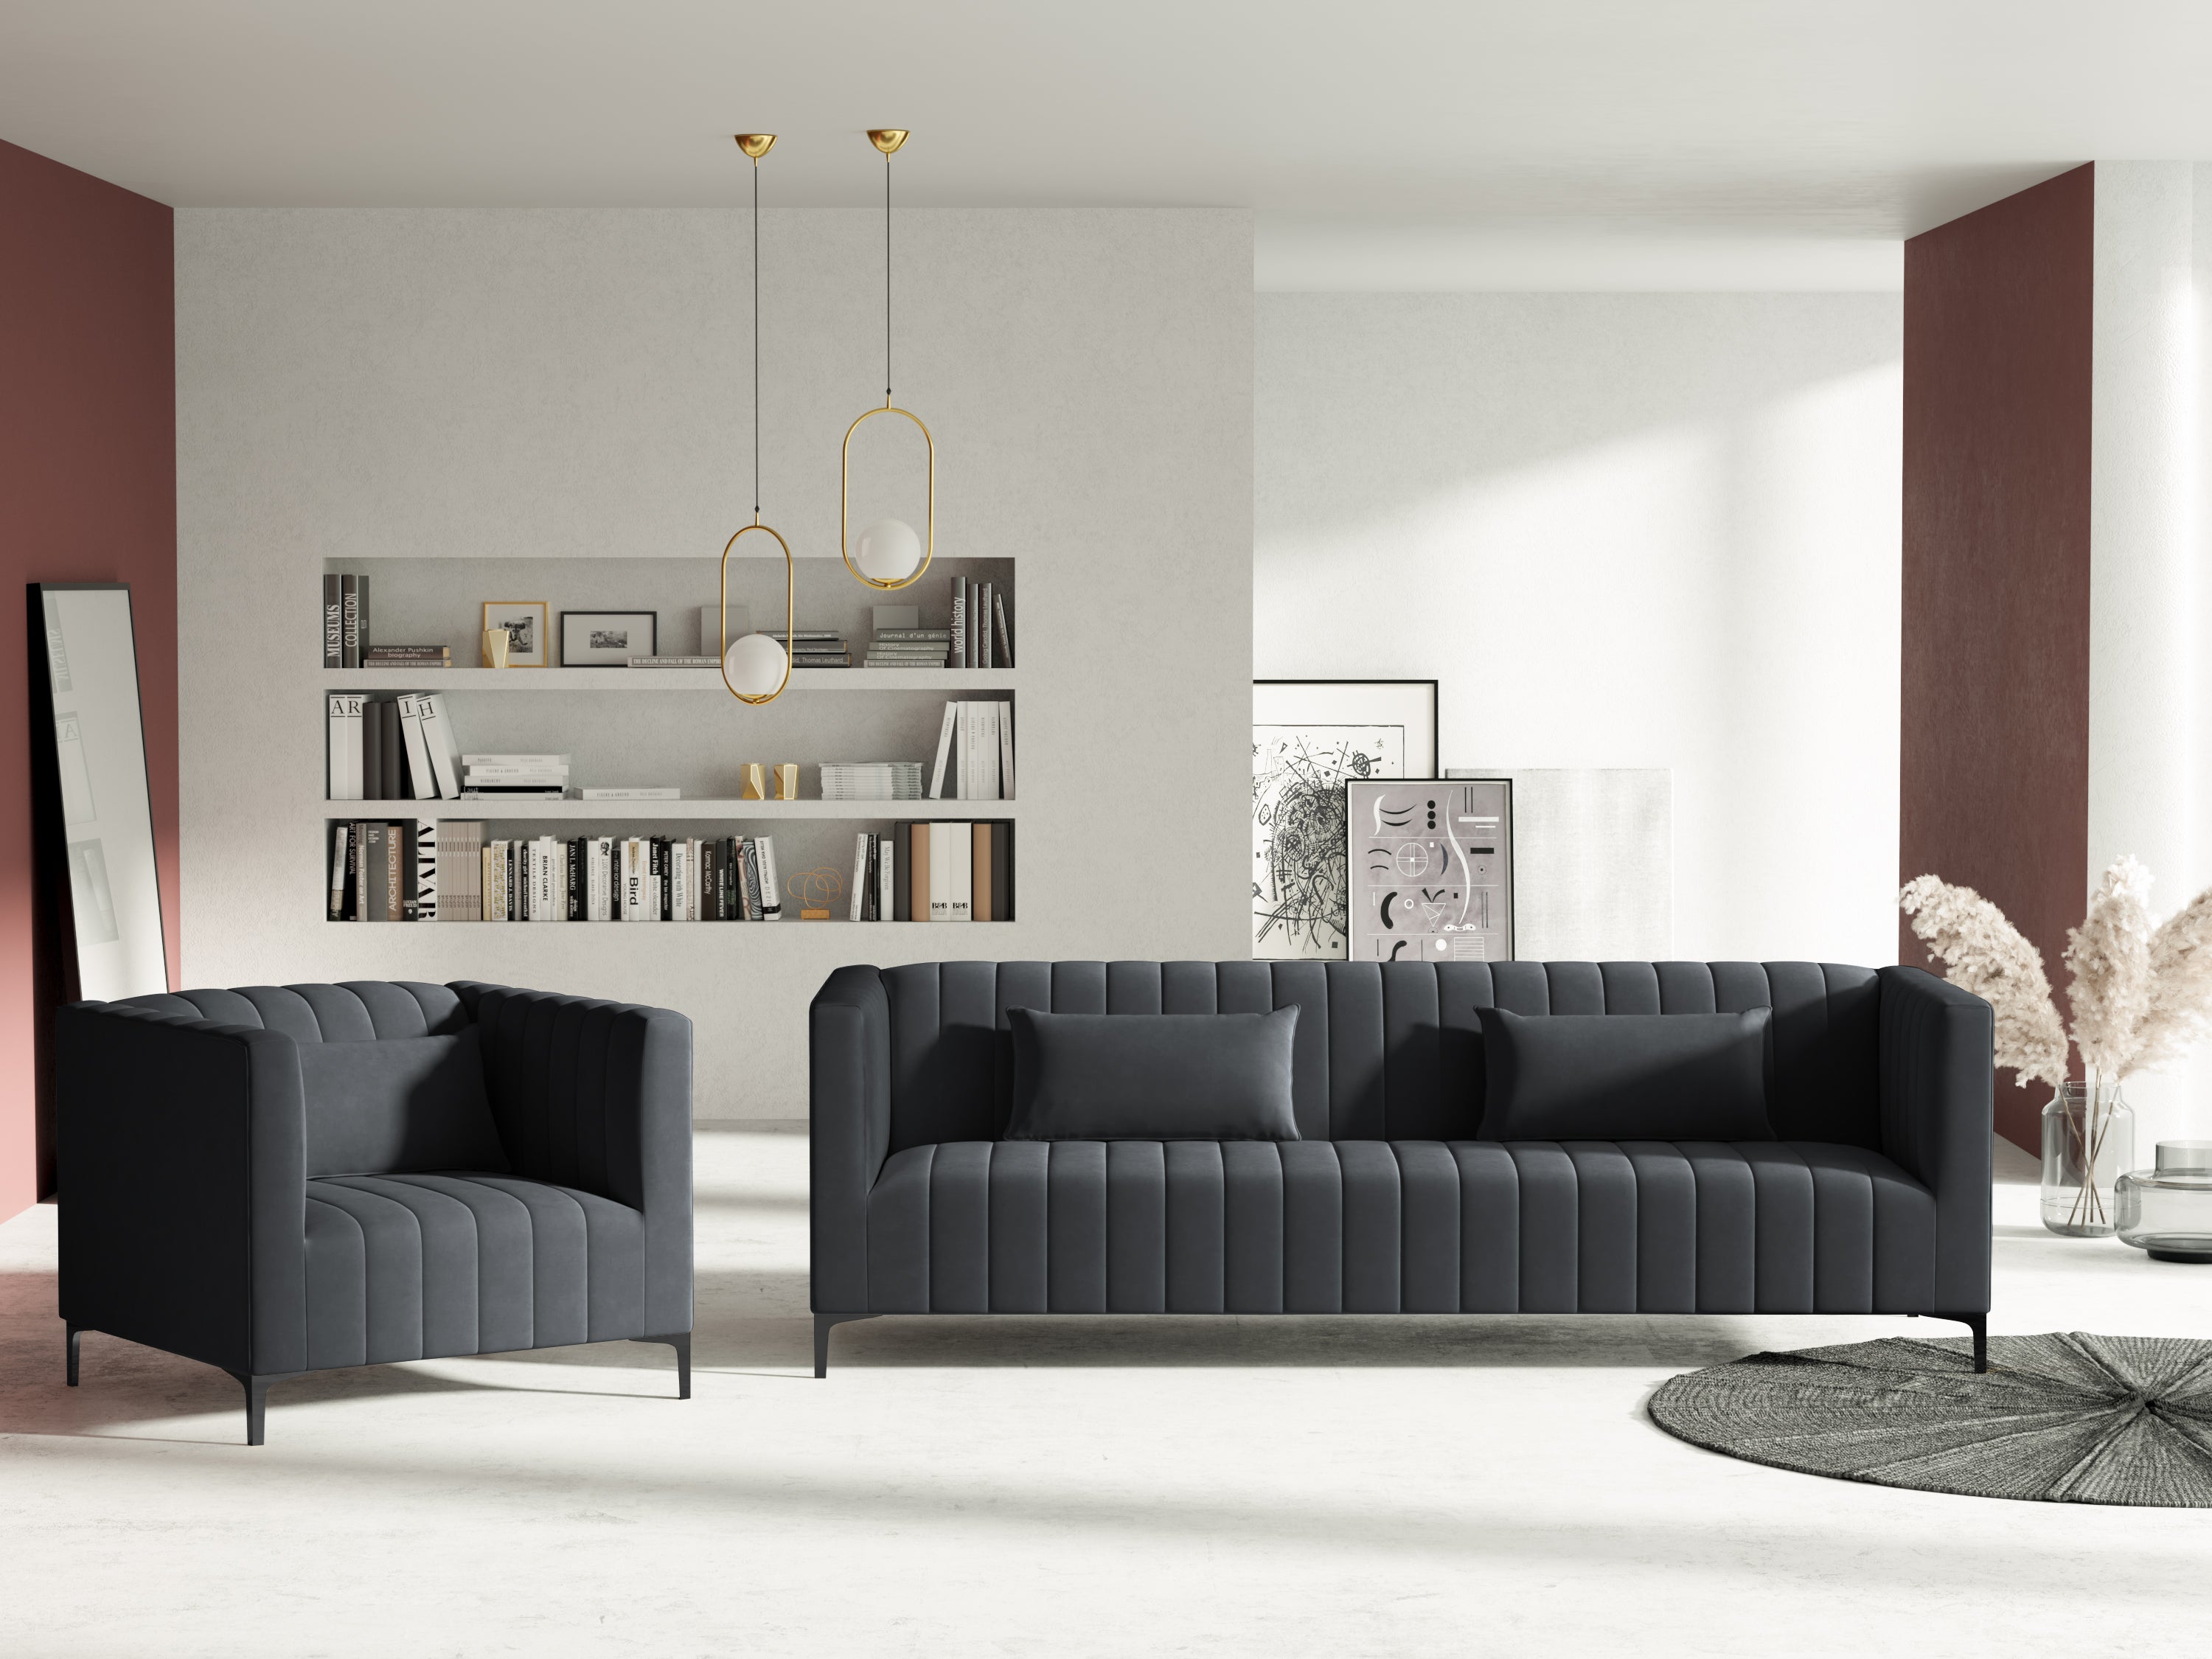 Glamor -style armchair dark gray